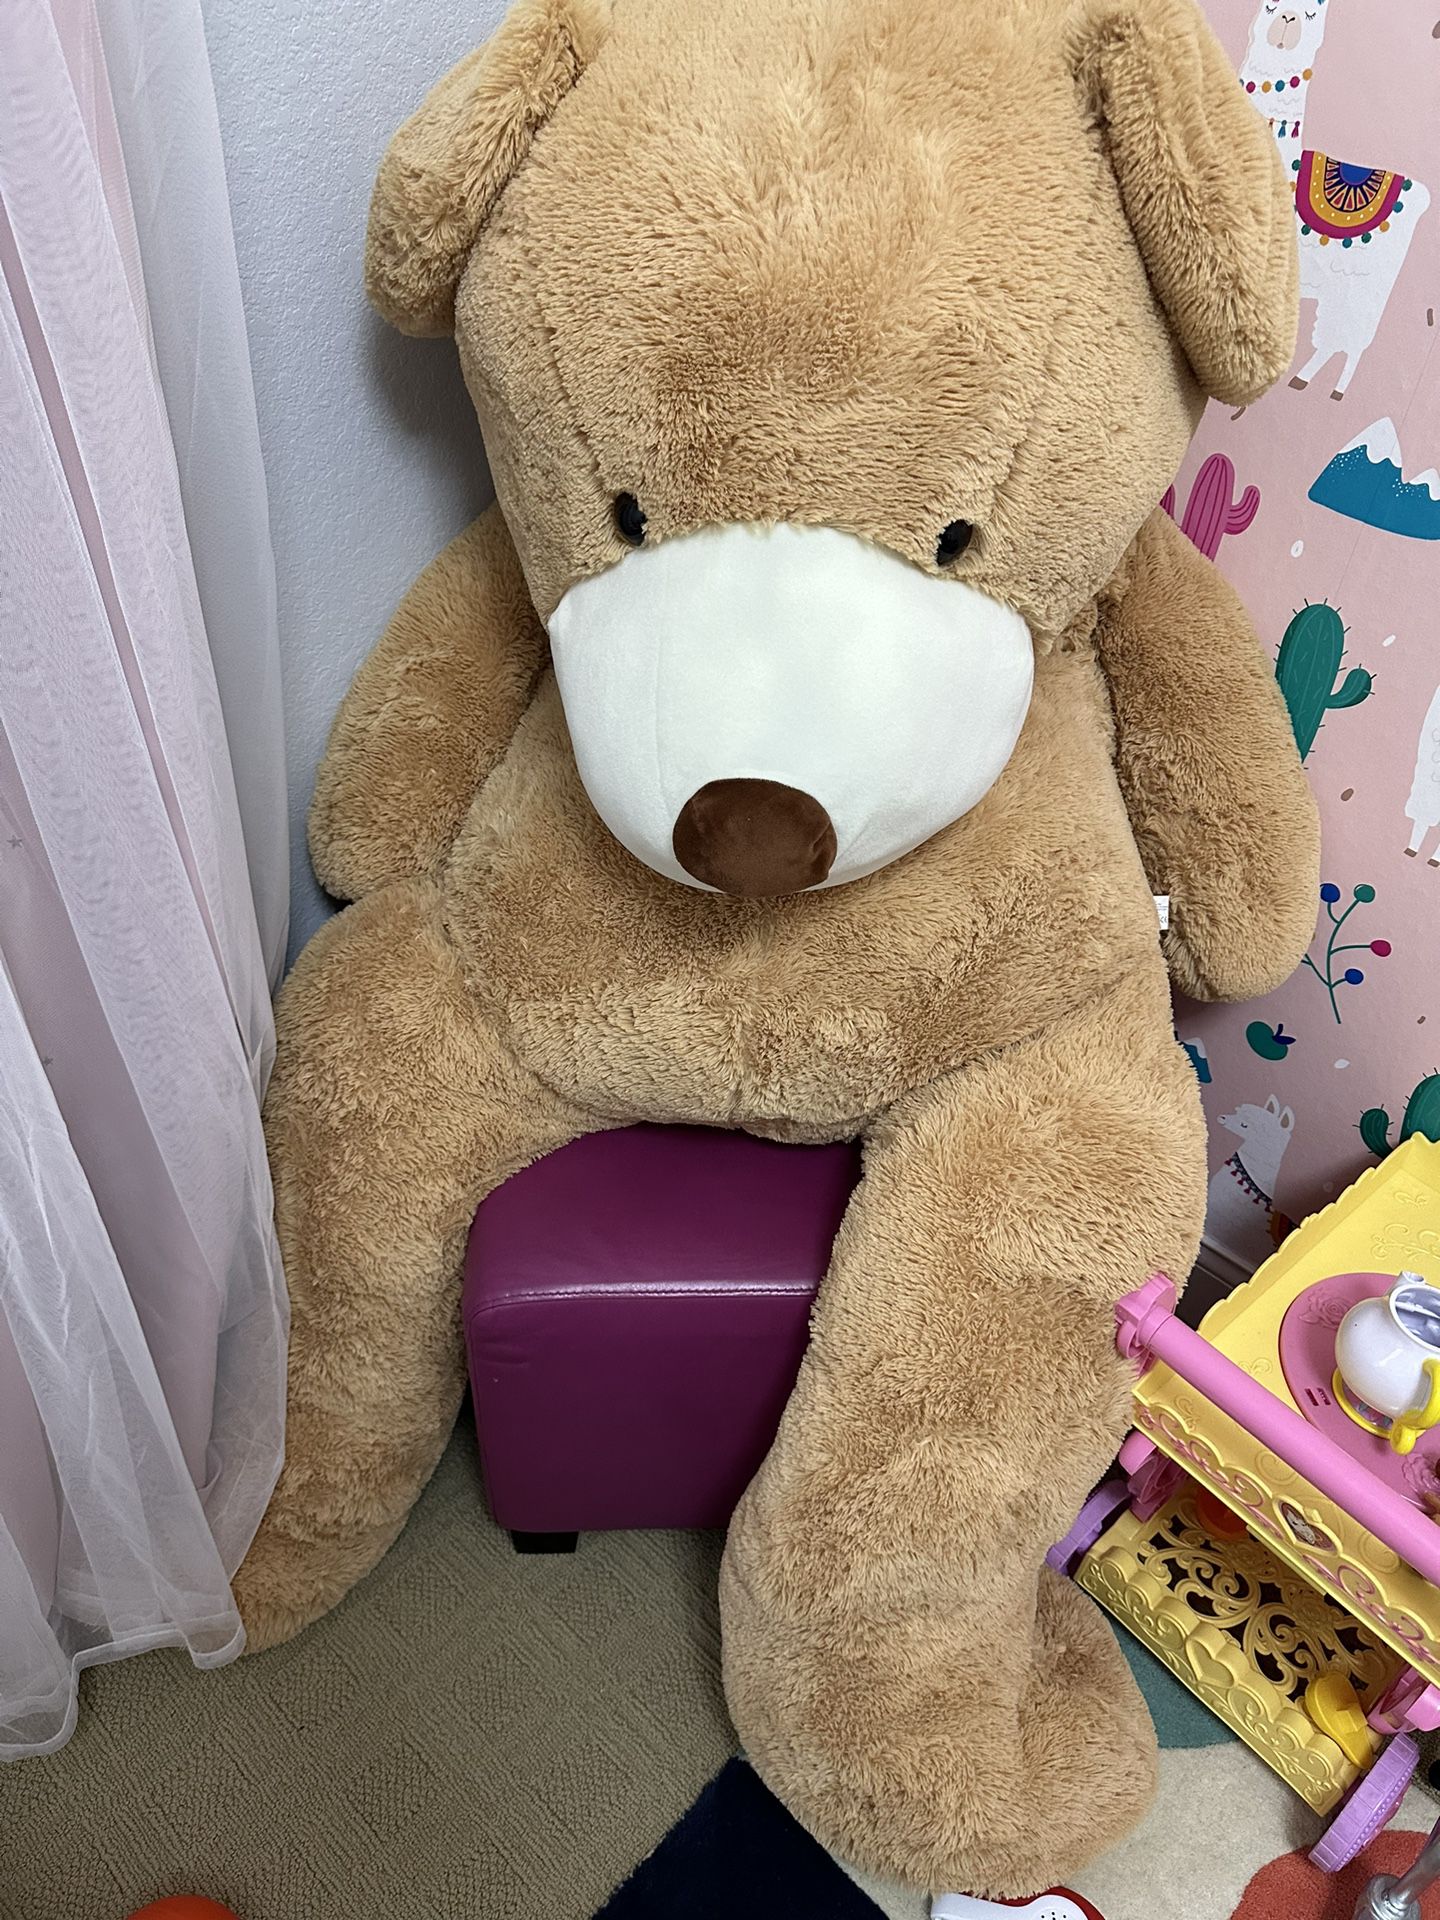 $30 - 5 Feet Tall - Giant Stuffed Teddy Bear For ALL AGES Premium Big Teddy Bear